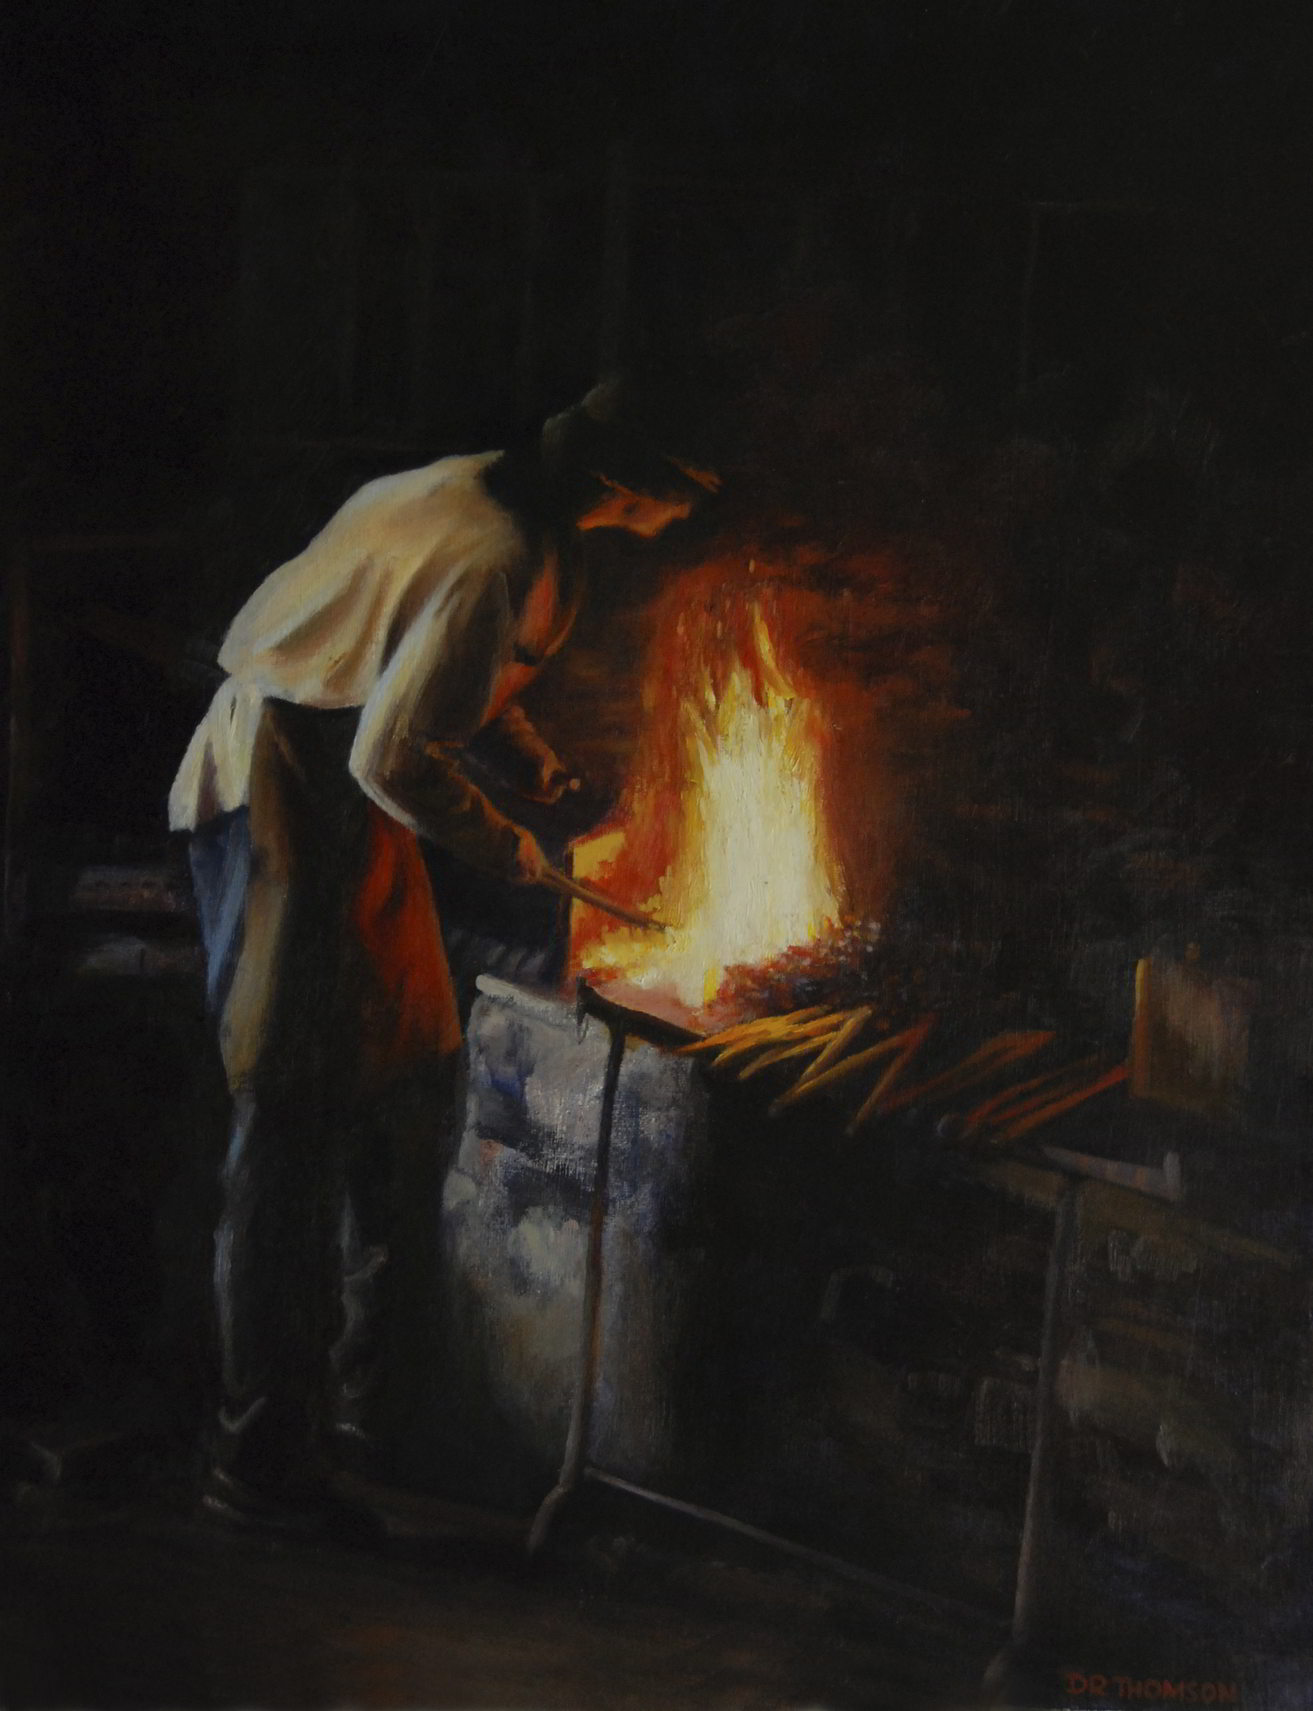 Blacksmith at work near Kilarney - Southern Ireland